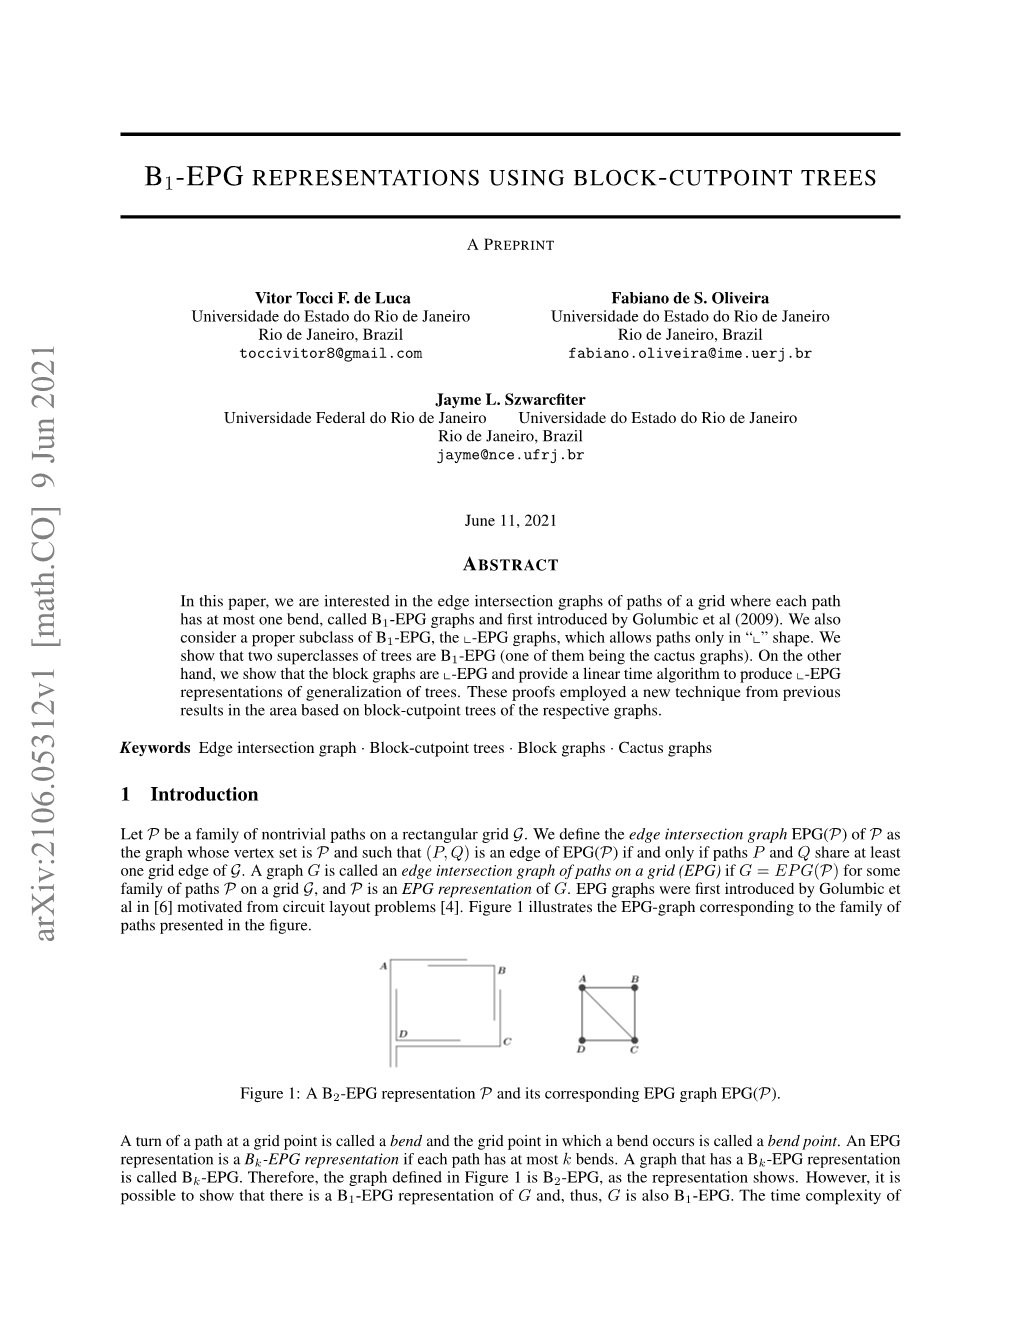 B1-EPG Representations Using Block-Cutpoint Trees